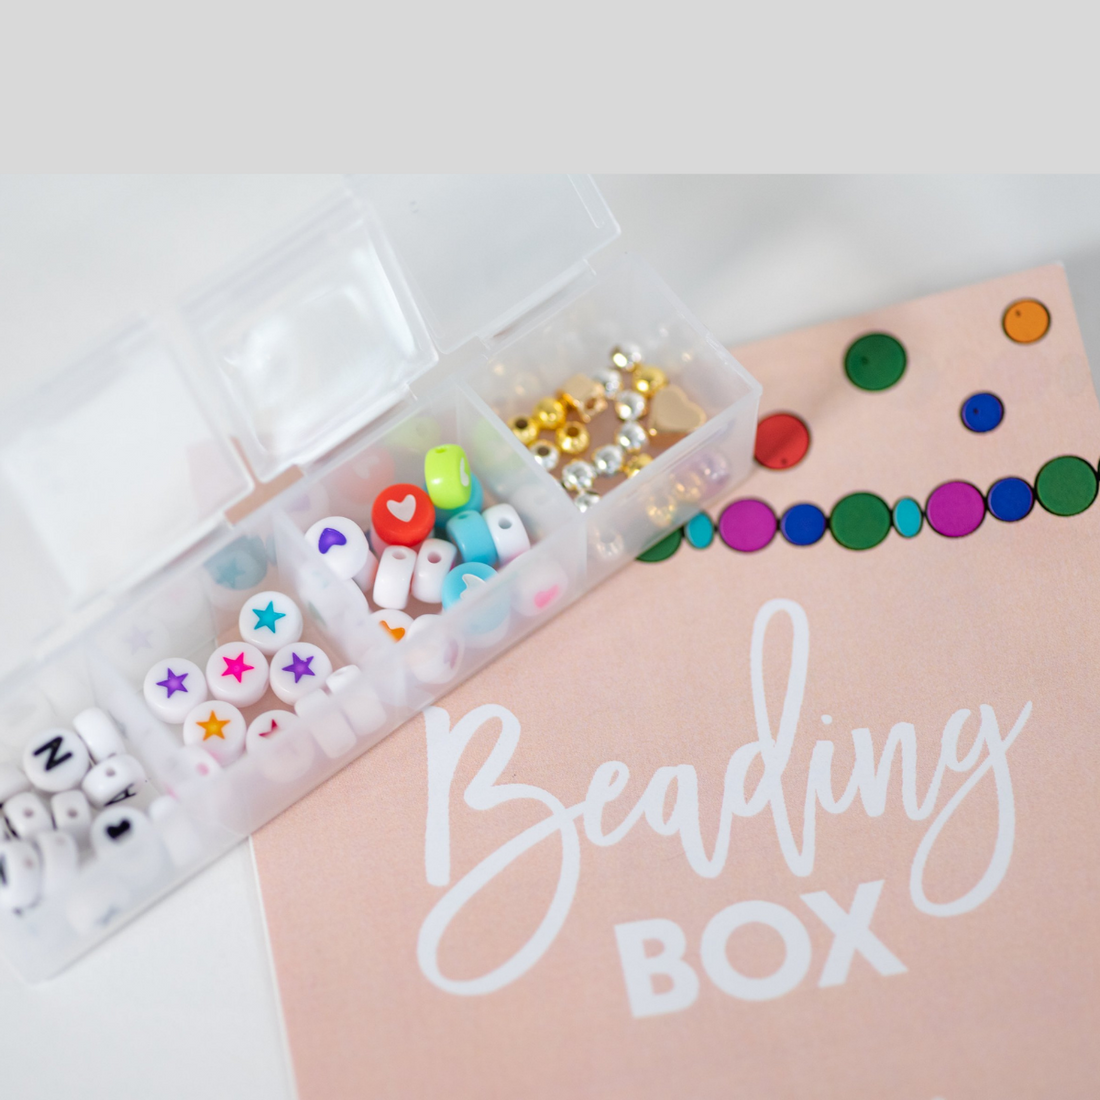 DIY Letter Beading Box